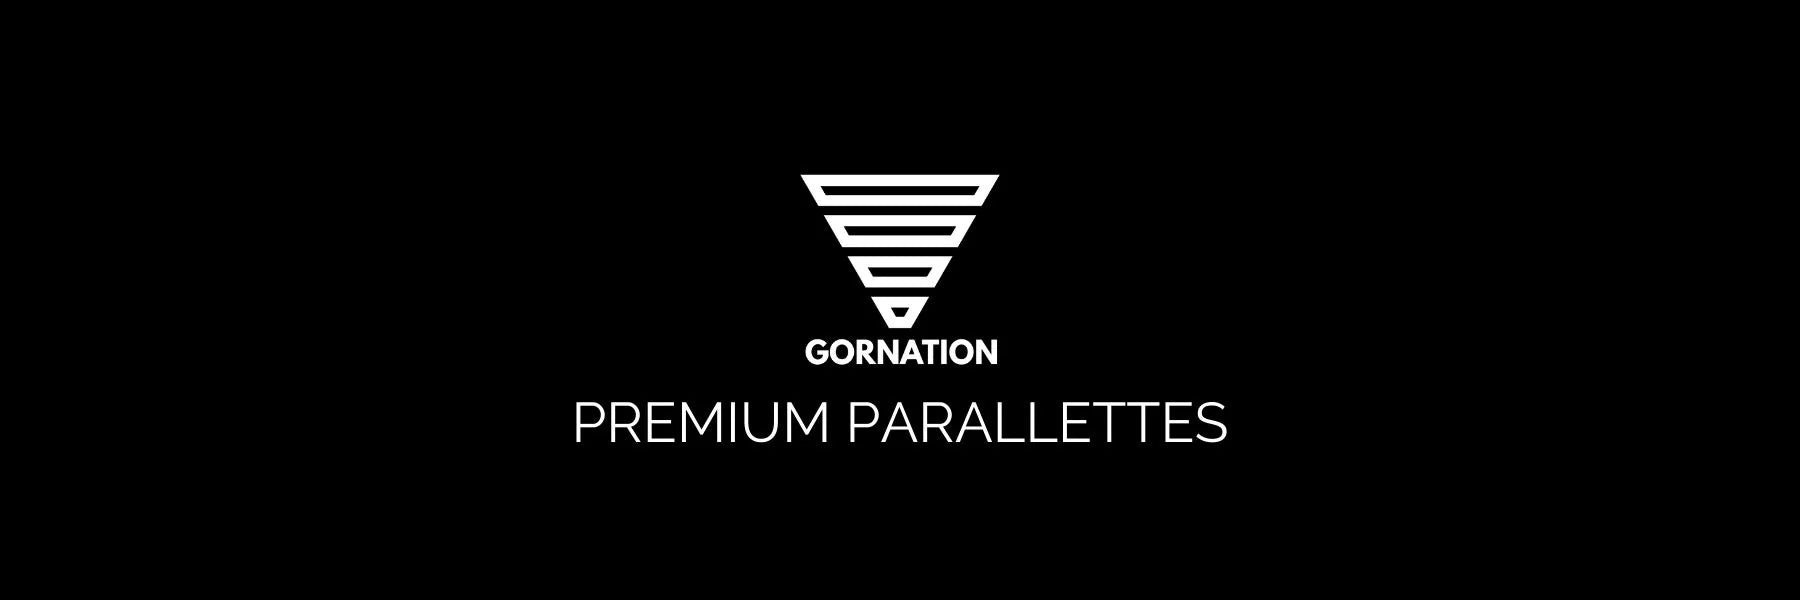 Premium Parallettes Construction page - how to built the p-bars